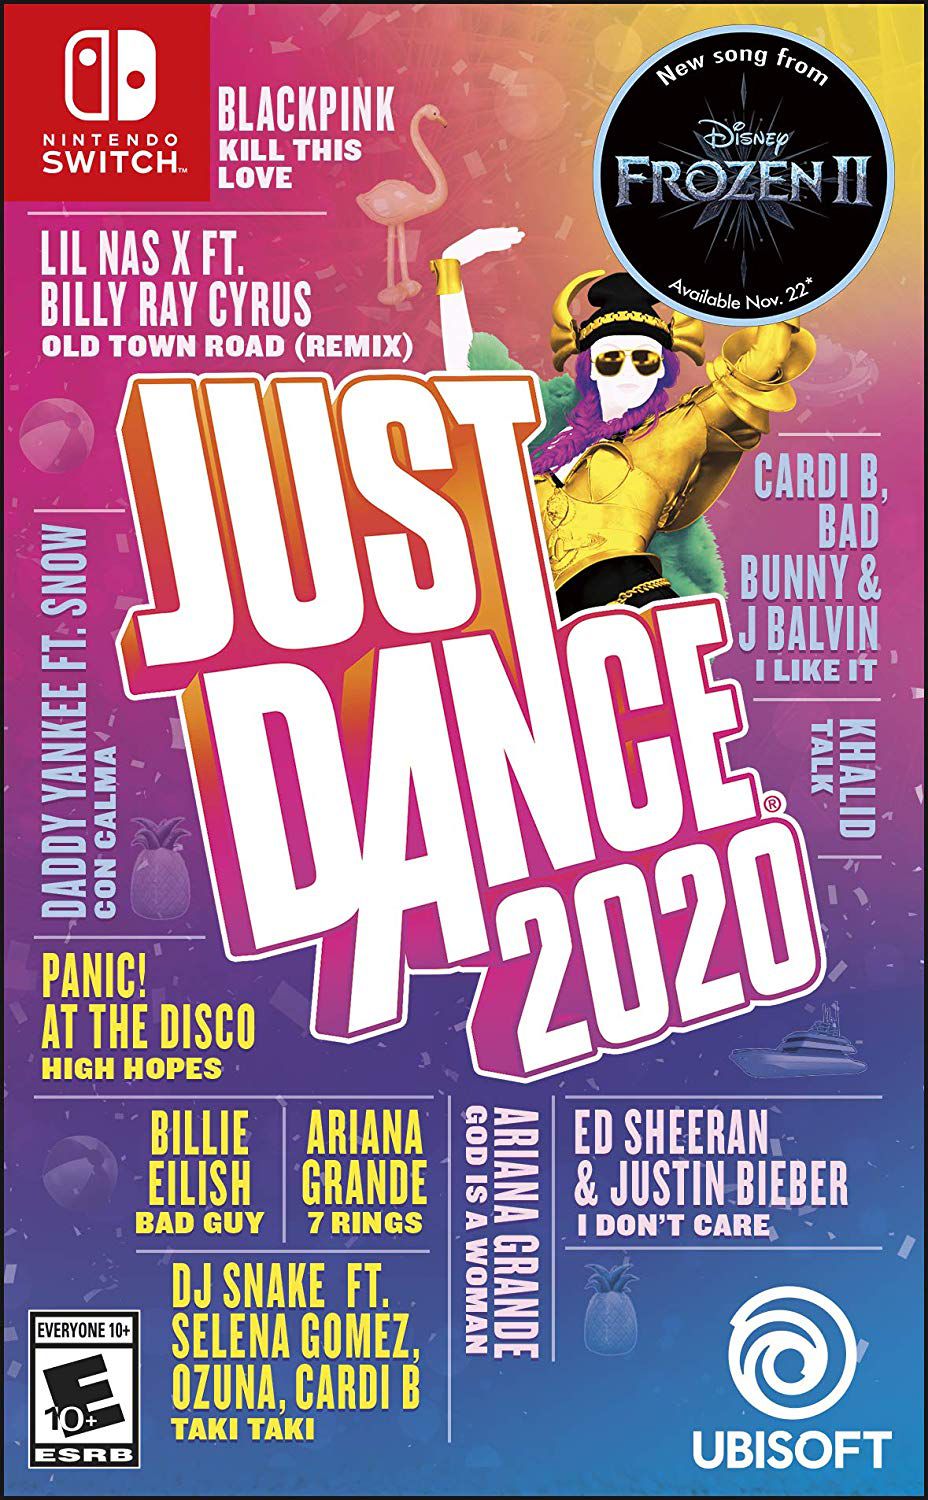 LISTA DE MÚSICAS (PARTE 1) - Just Dance 2020 